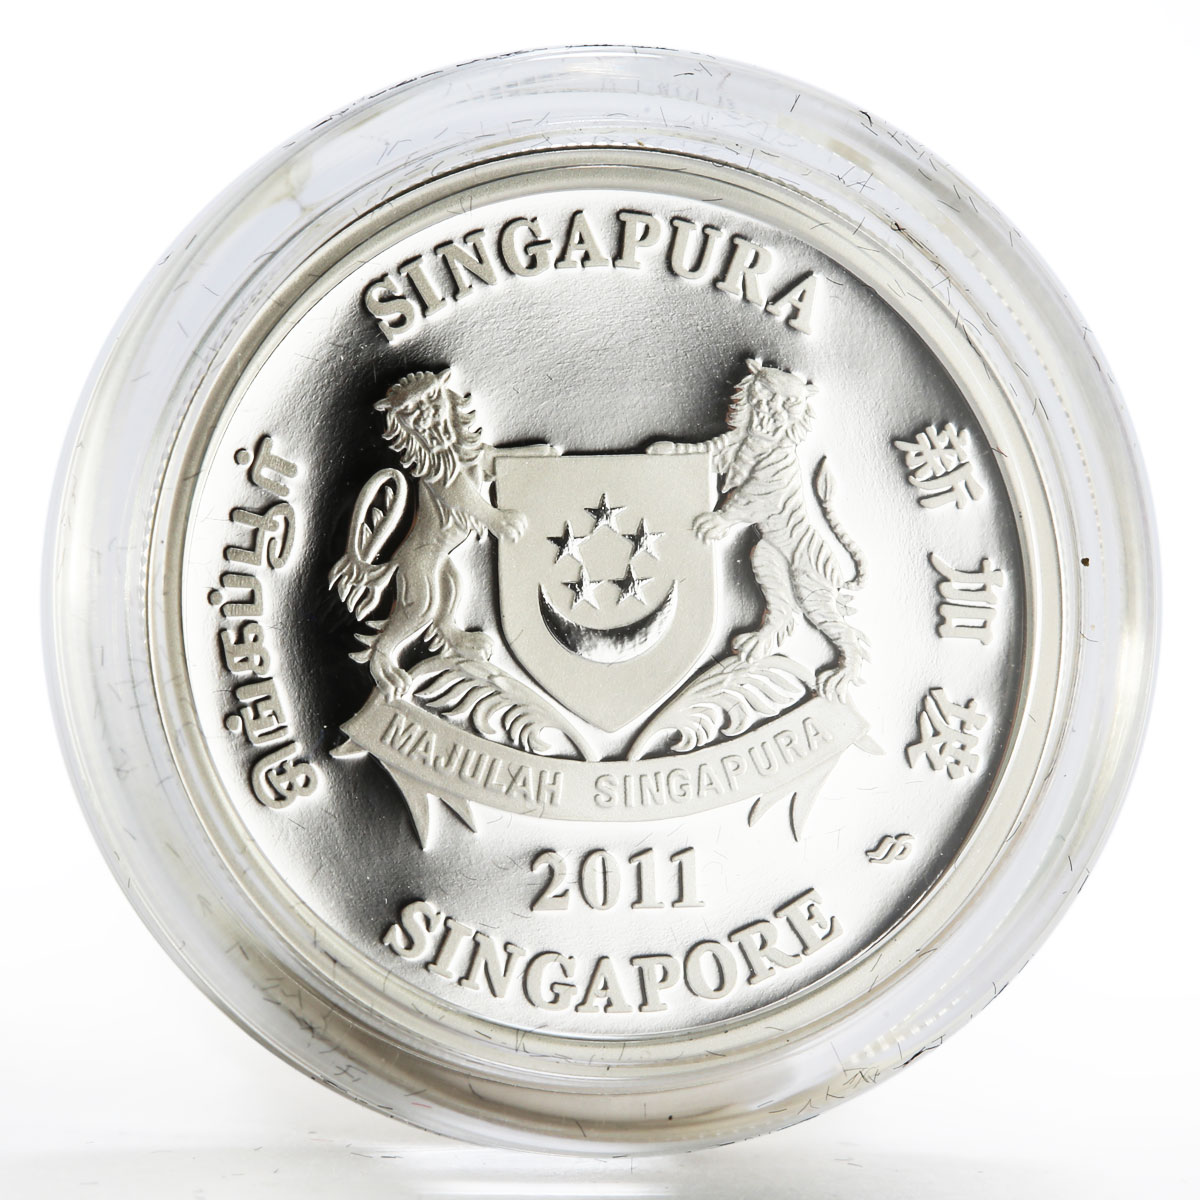 Singapore 1 dollar Spathoglottis Primrose Orchid colored proof silver coin 2011